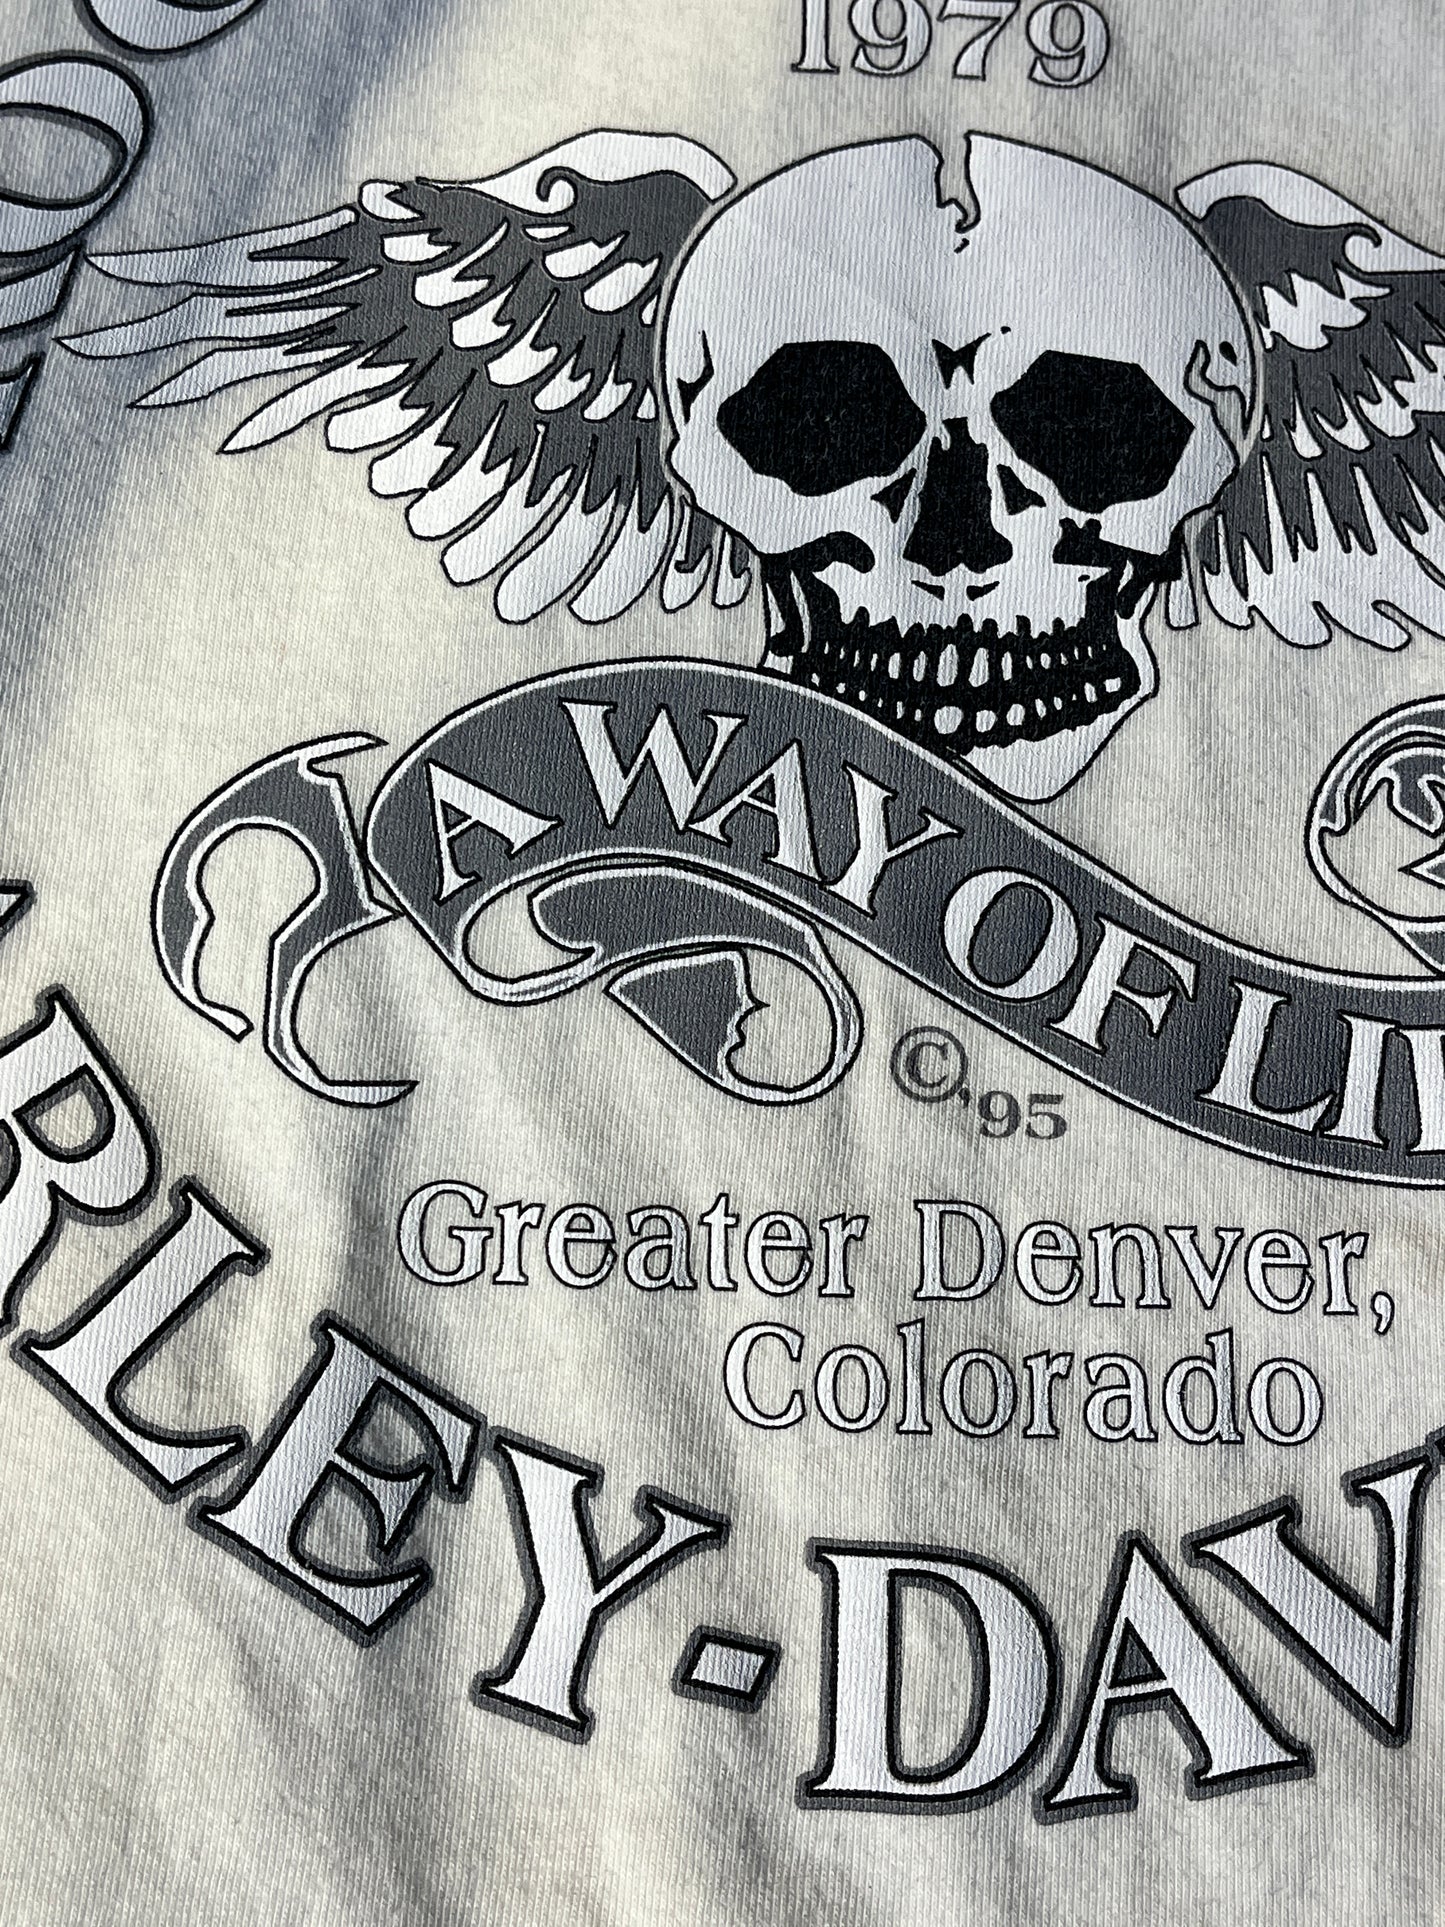 Vintage Harley Davidson T-Shirt A WAY OF LIFE